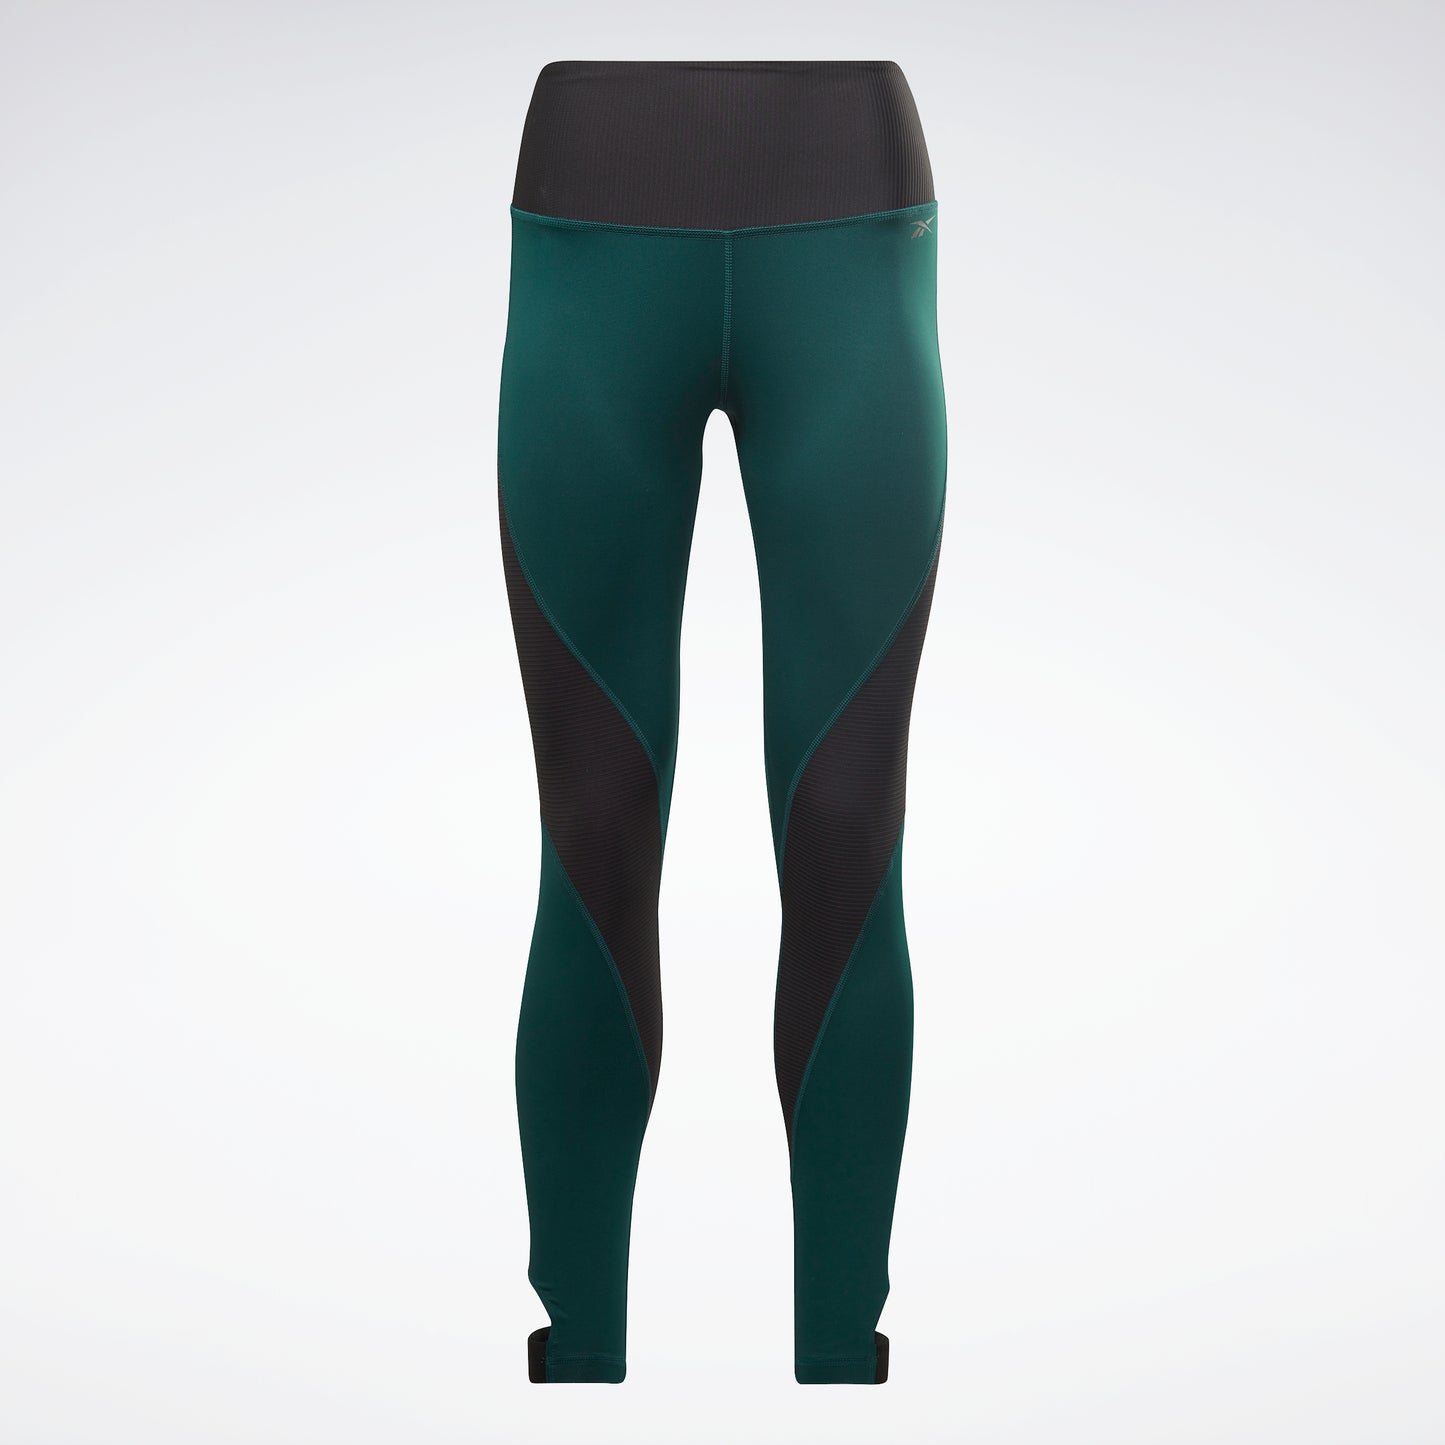 Carbon Fiber X1 Leggings - Premium Activewear for Women